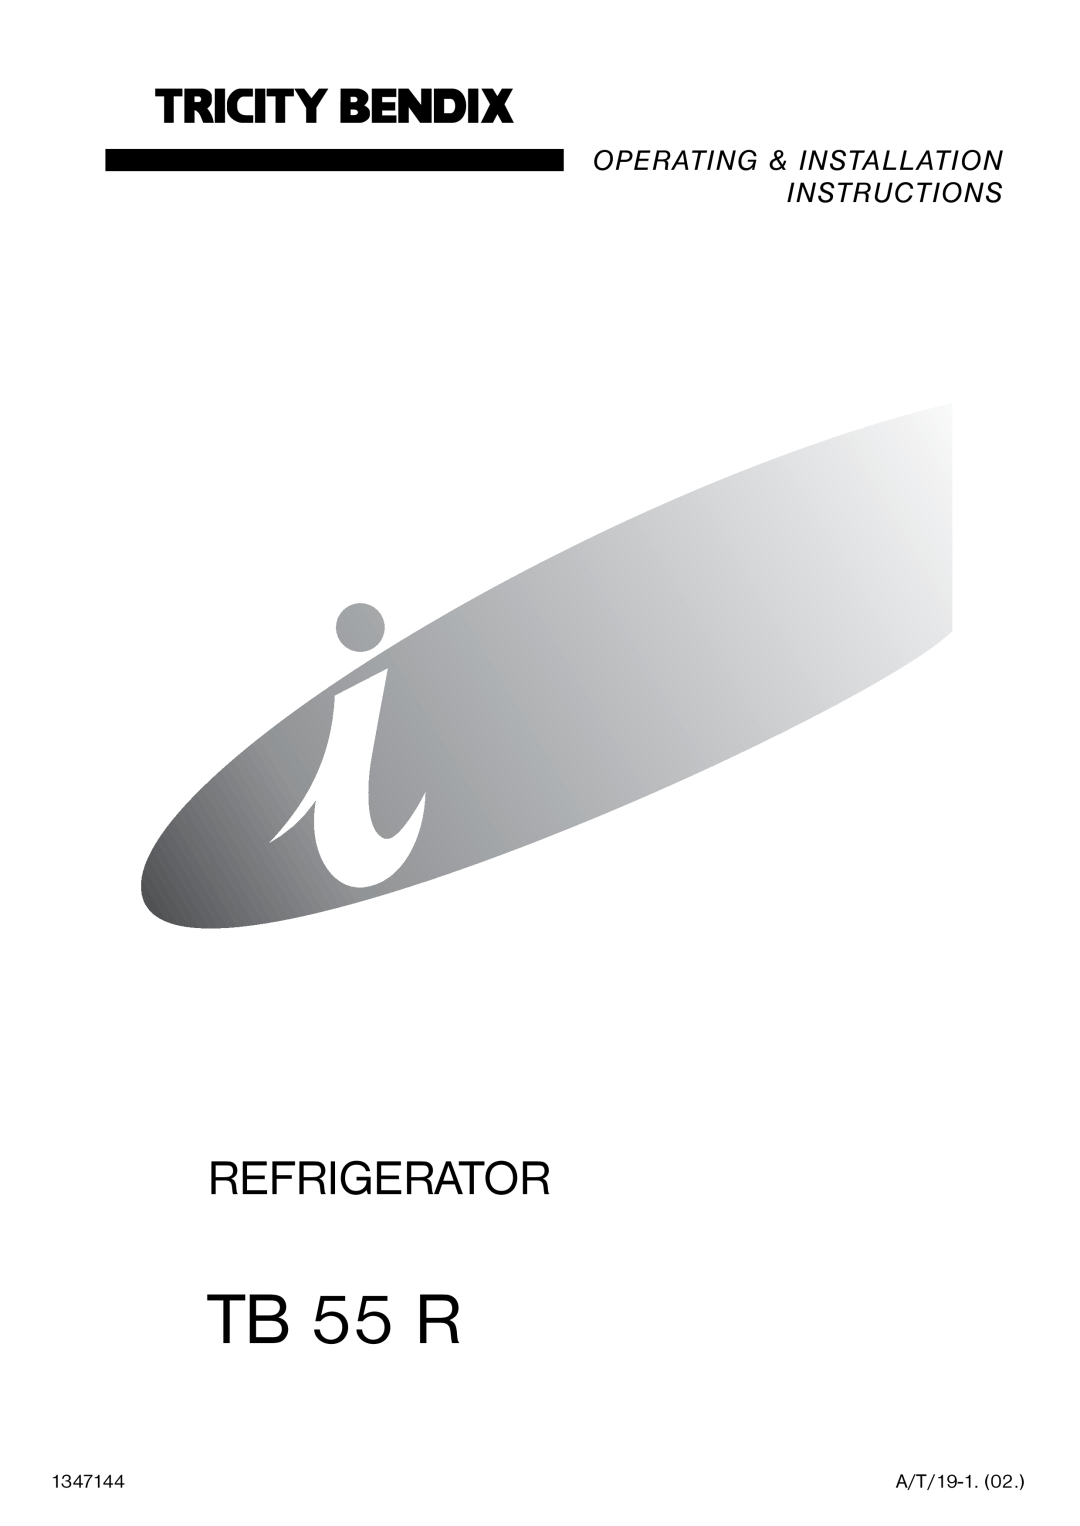 Tricity Bendix TB 55 R installation instructions Refrigerator, Operating & Installation Instructions 